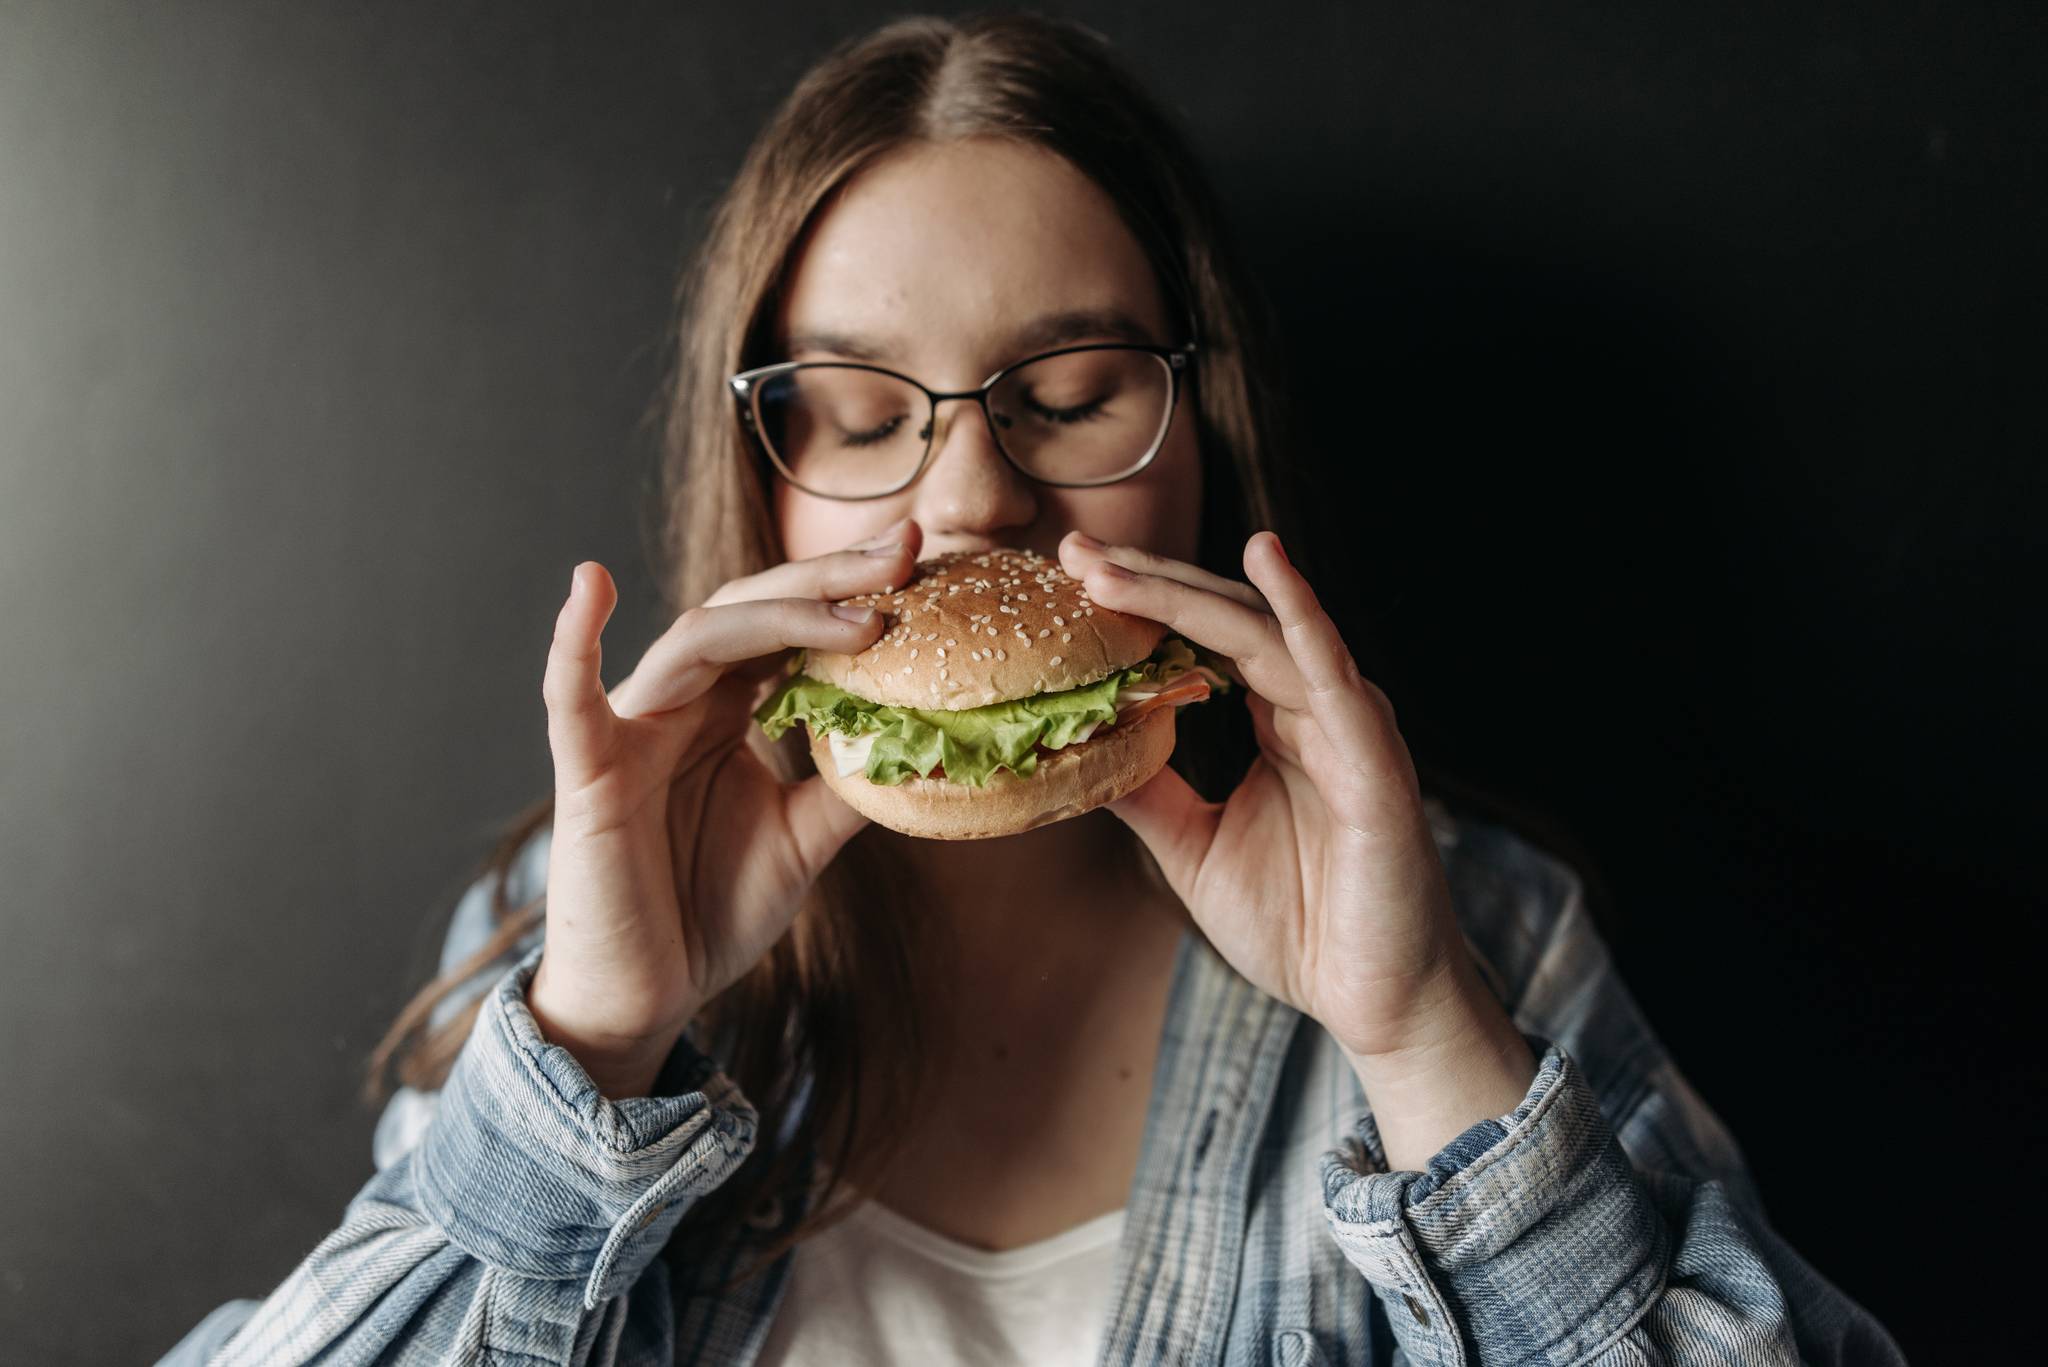 Chicken Big Mac menu add shows power of collective voice